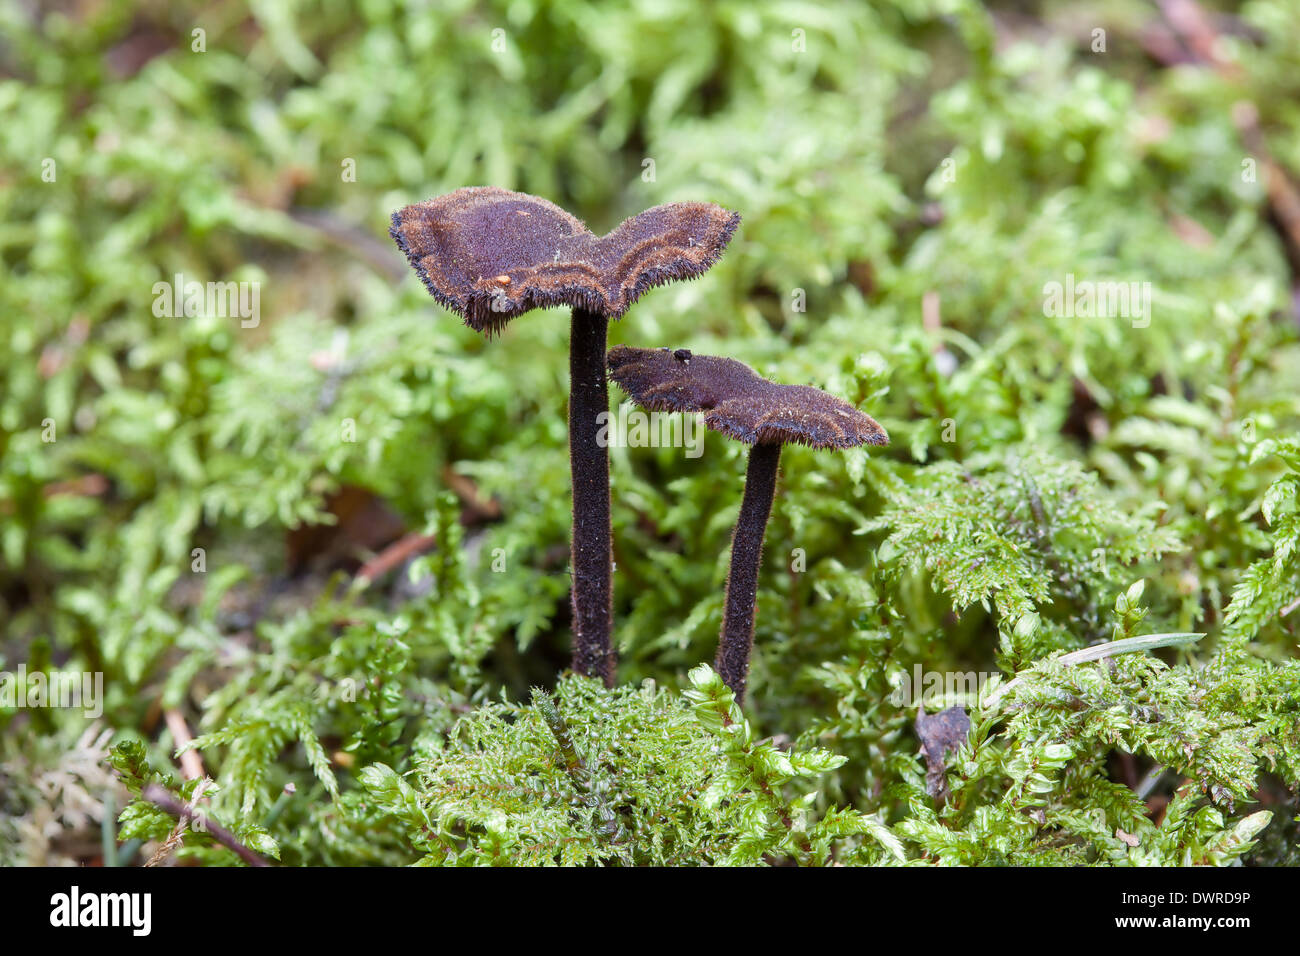 Pinecone mushroom growing on moss Stock Photo